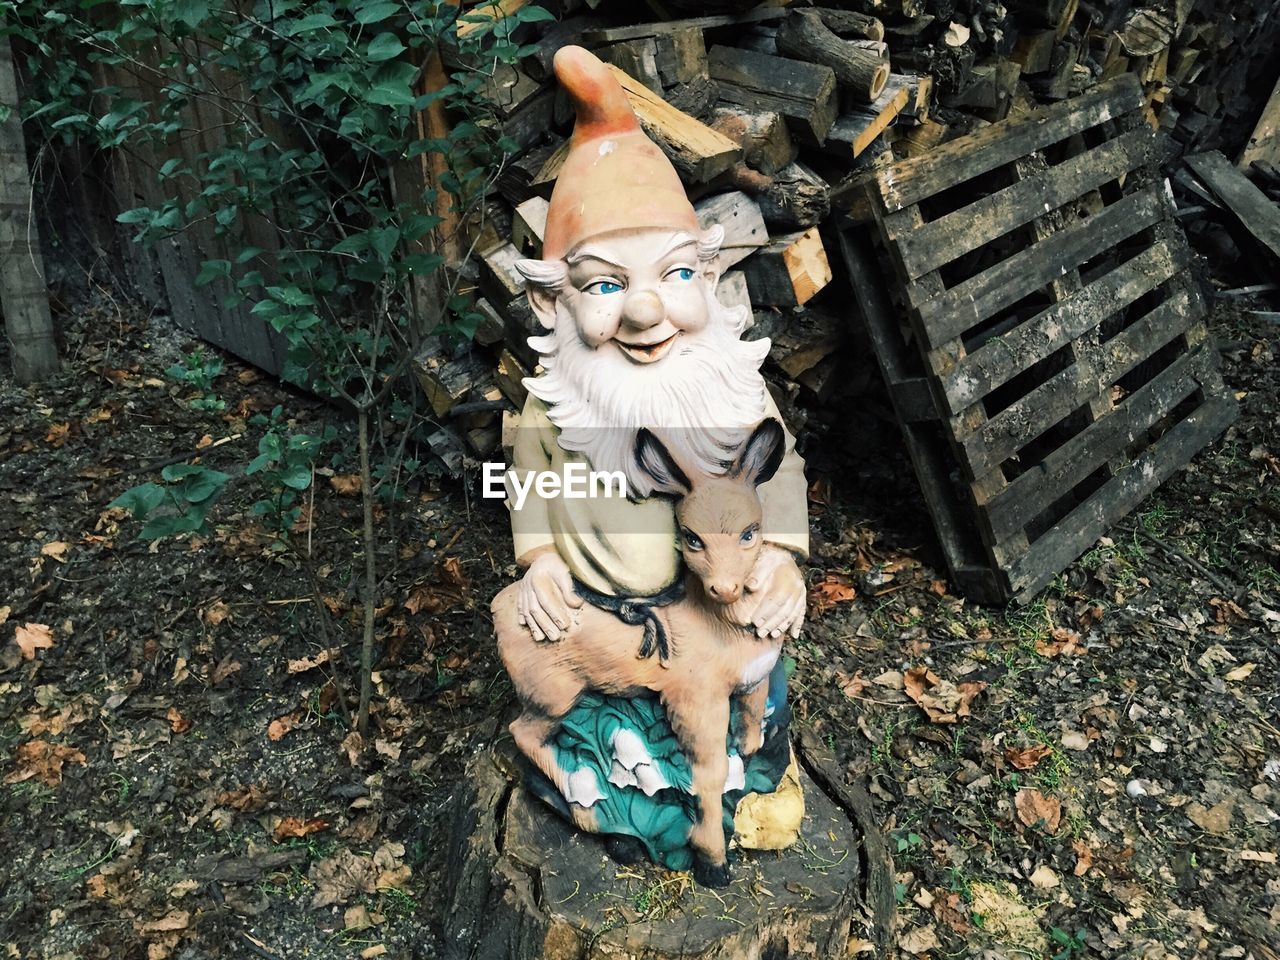 Garden gnome on tree stump